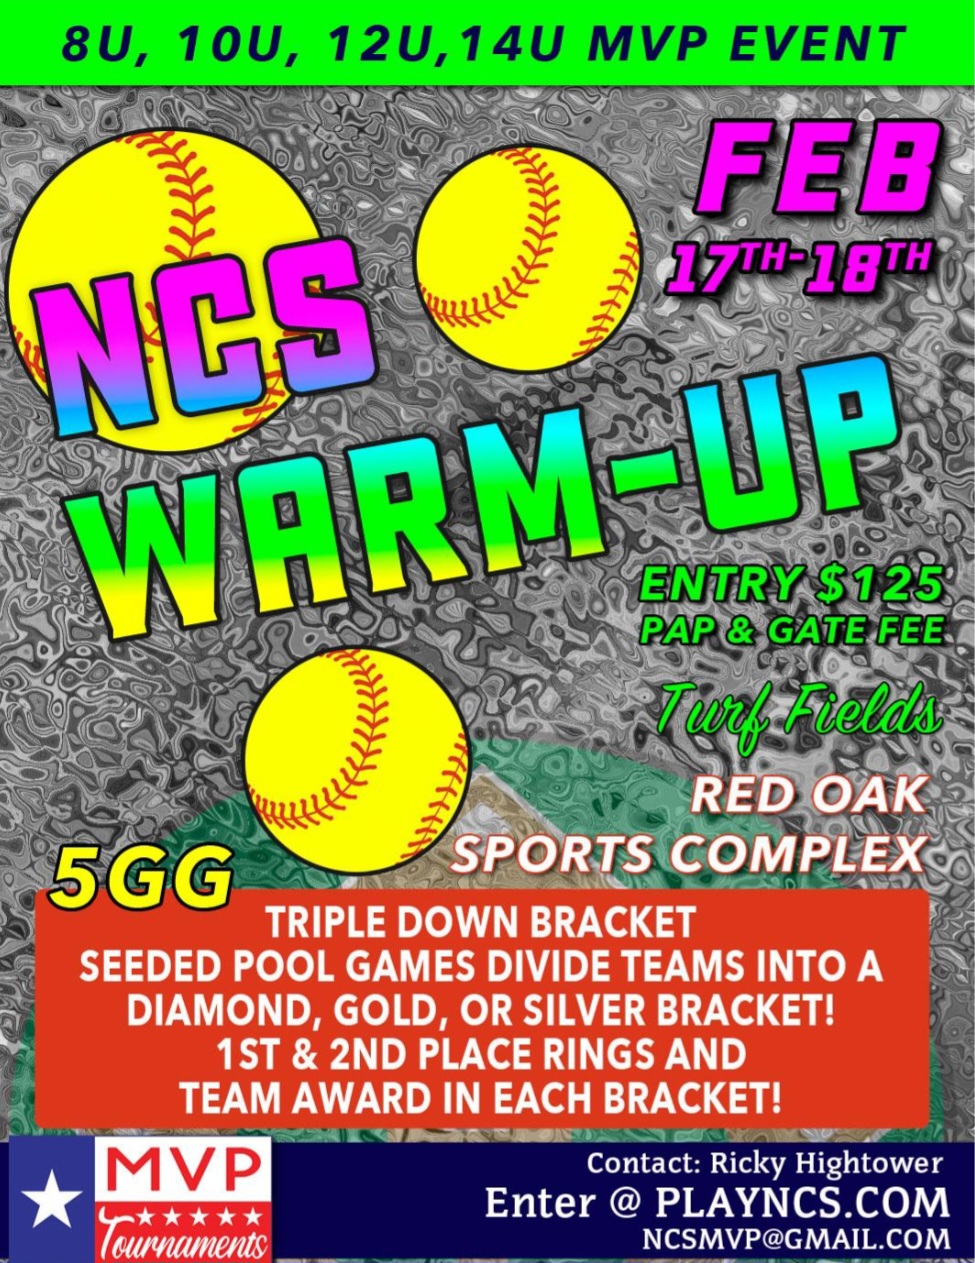 NCS WARMUP 5GG RED OAK MVP EVENT Logo